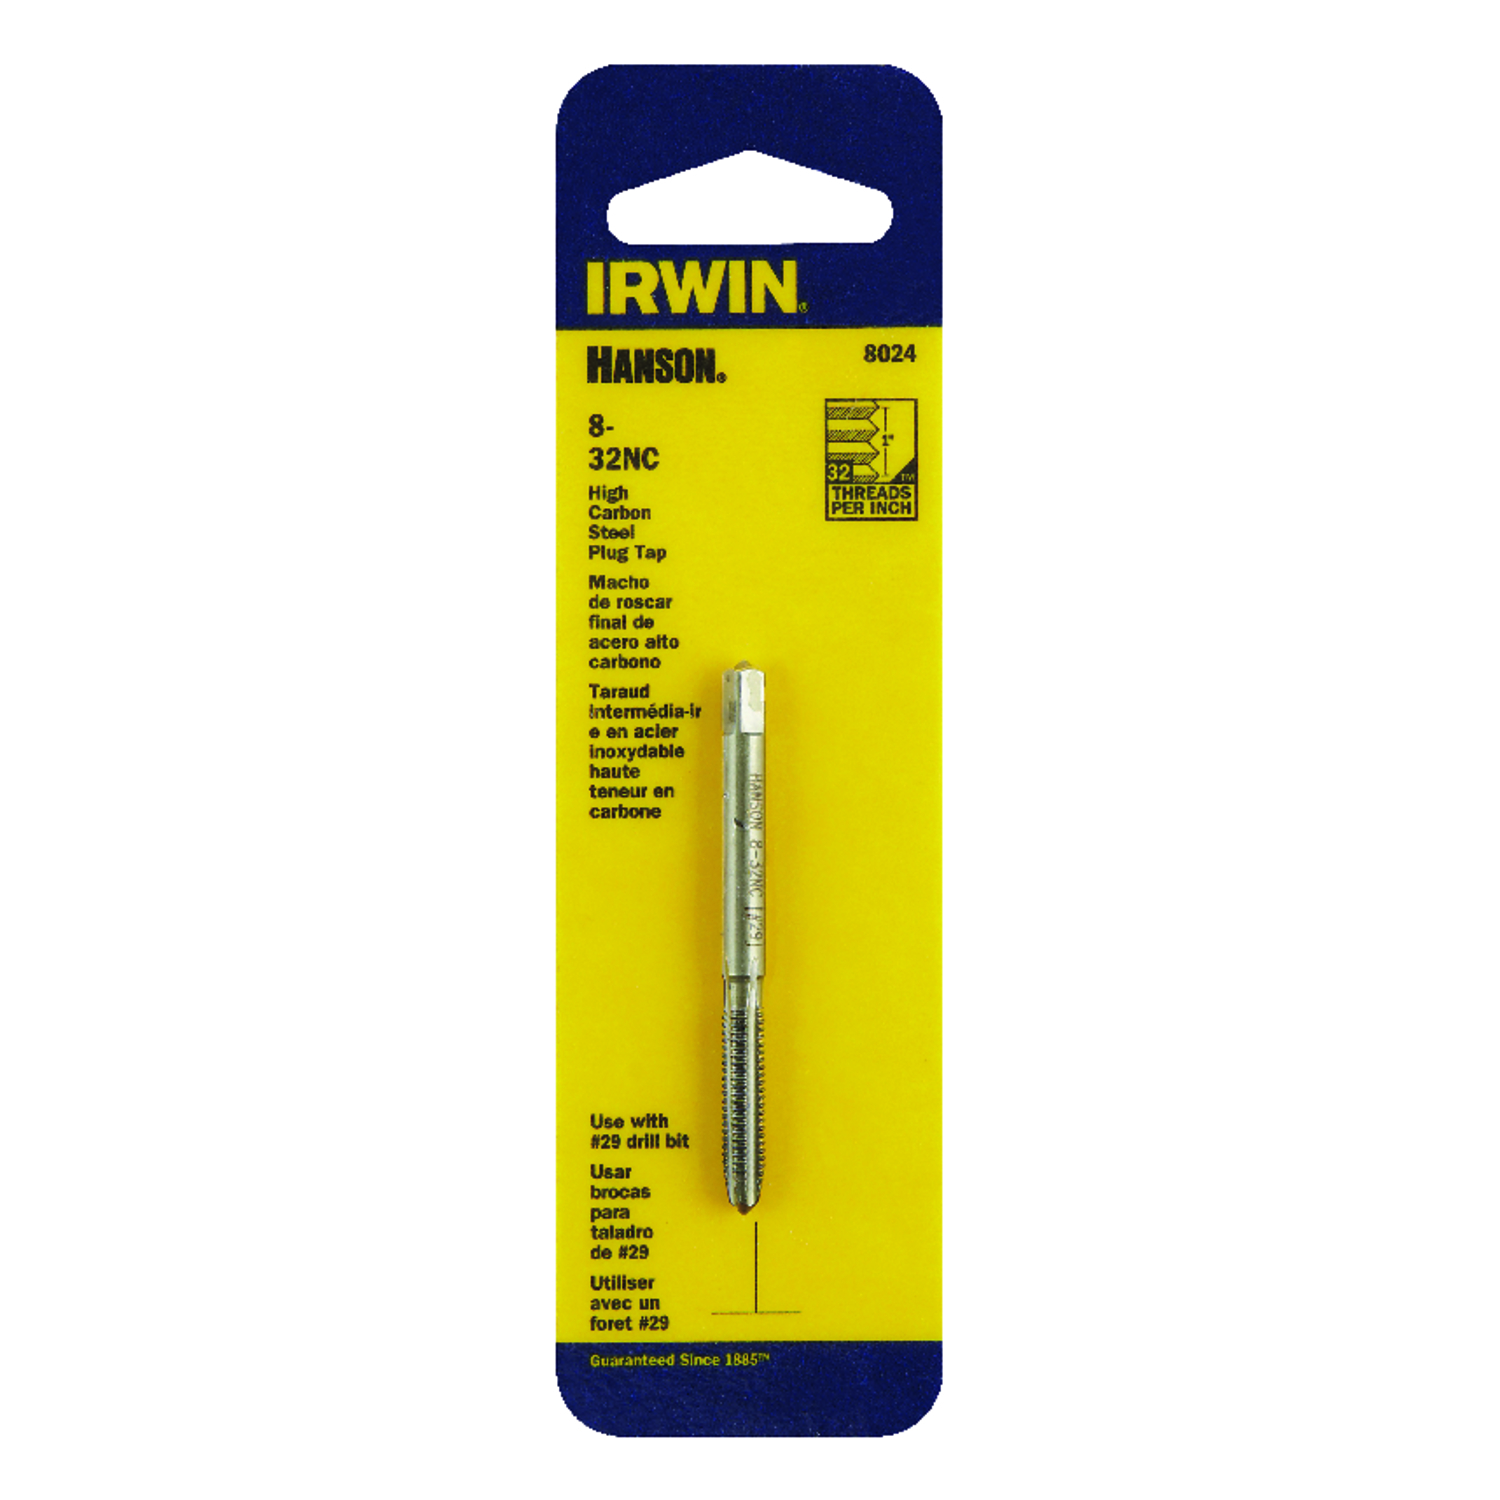 Irwin Hanson High Carbon Steel SAE Plug Tap 8-32 1 pc